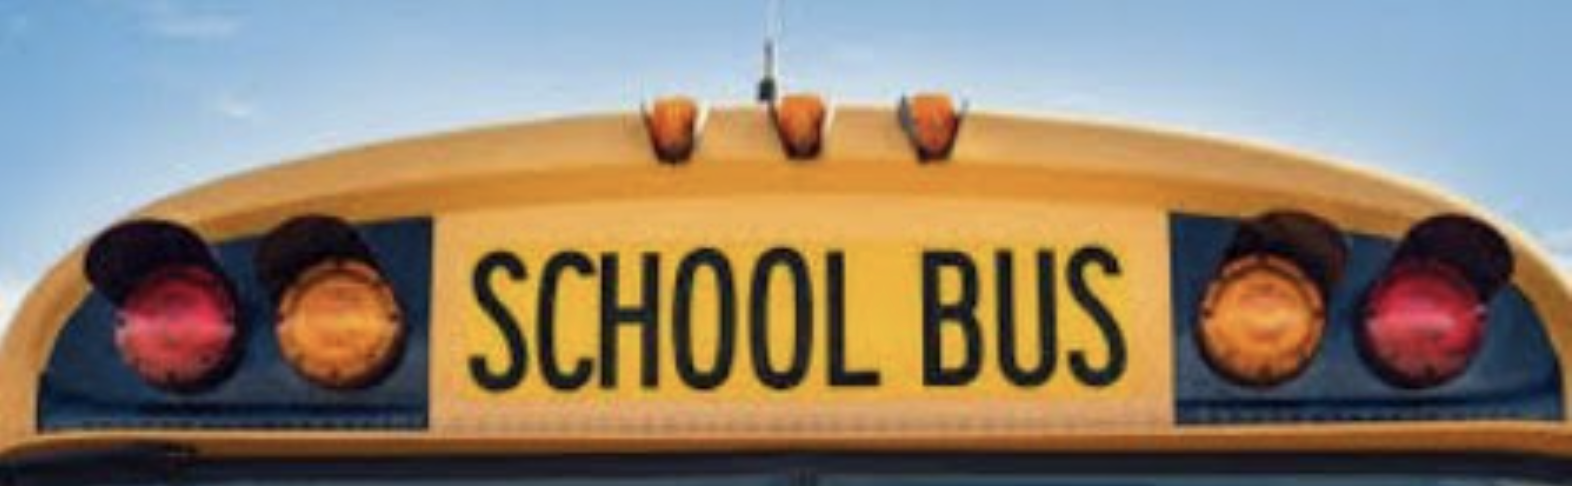 School Bus Header